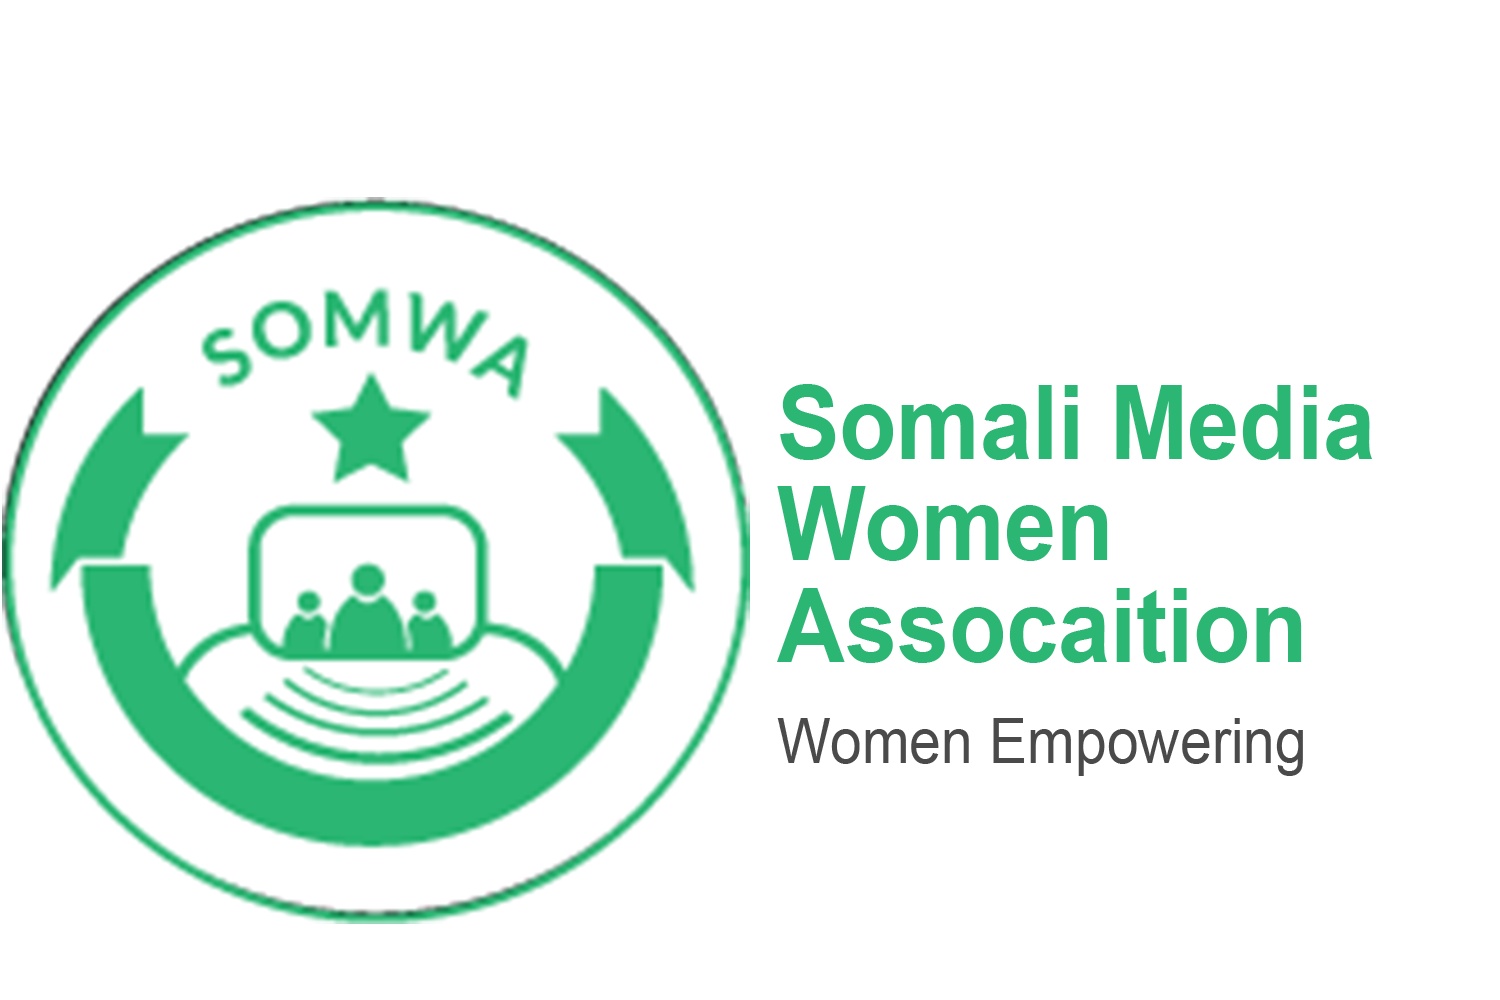 Somali Media Women Association